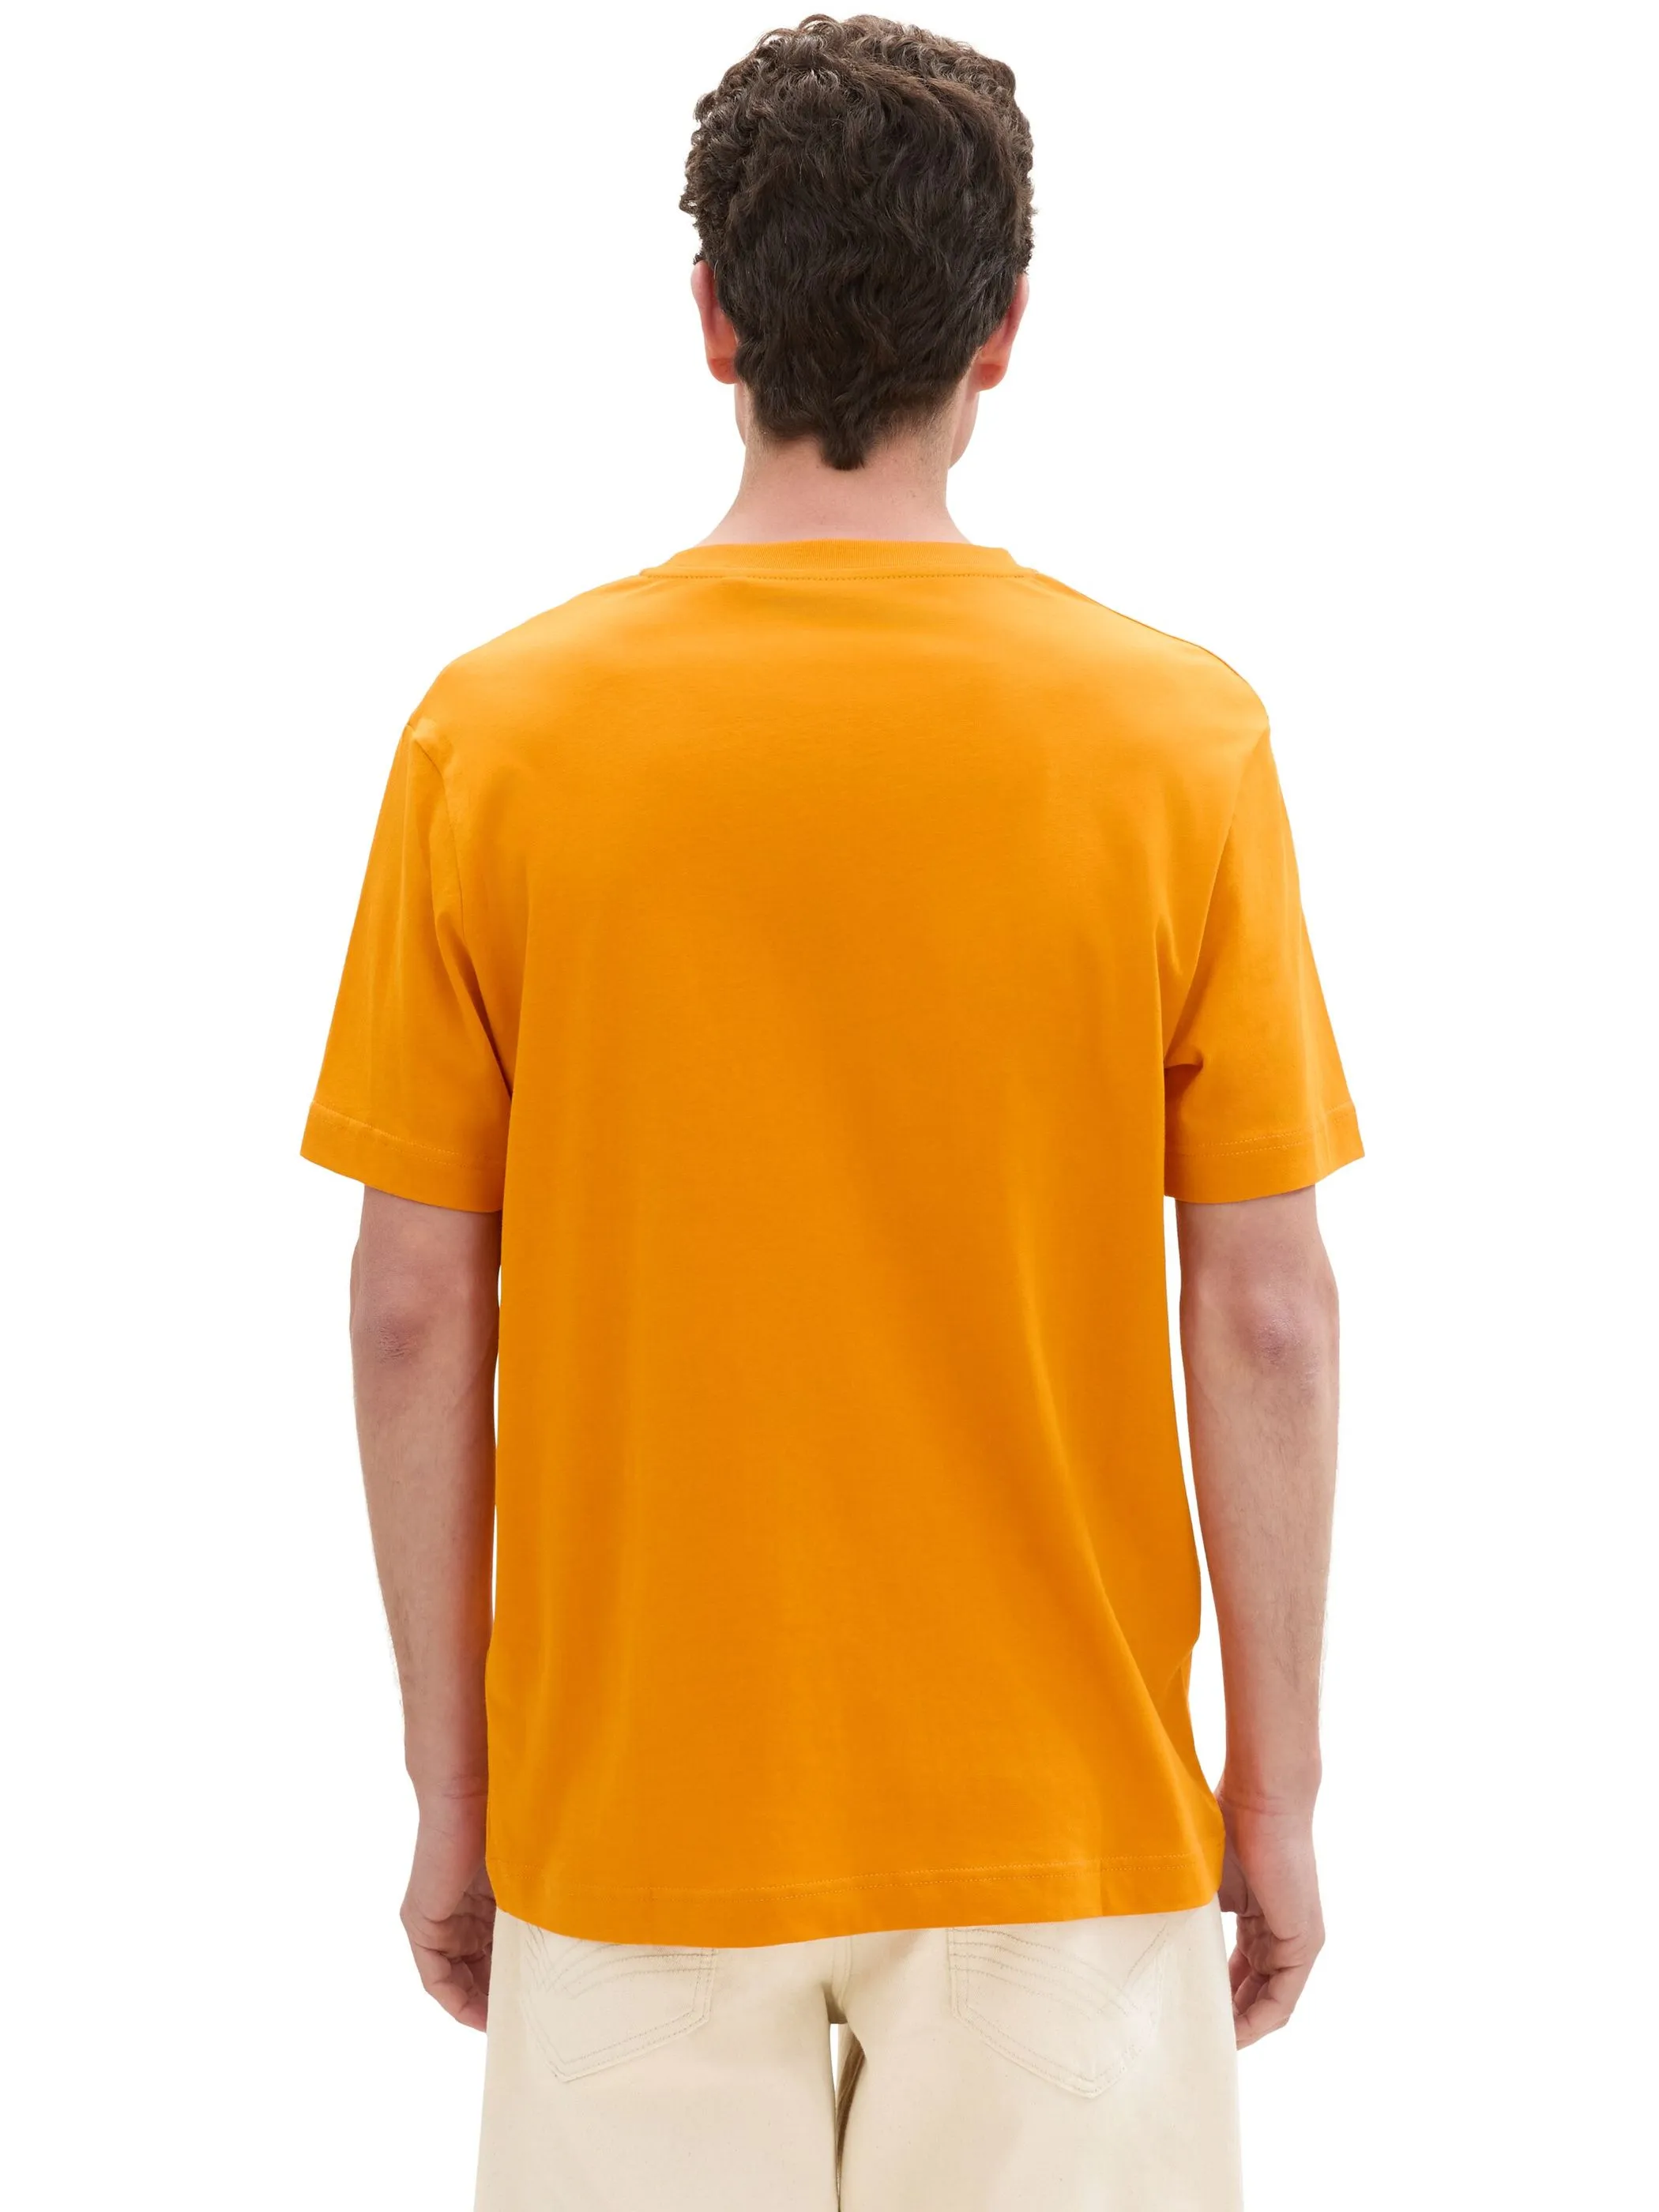 Tom Tailor 1043276 t-shirt with print Orange 898849 12392 2